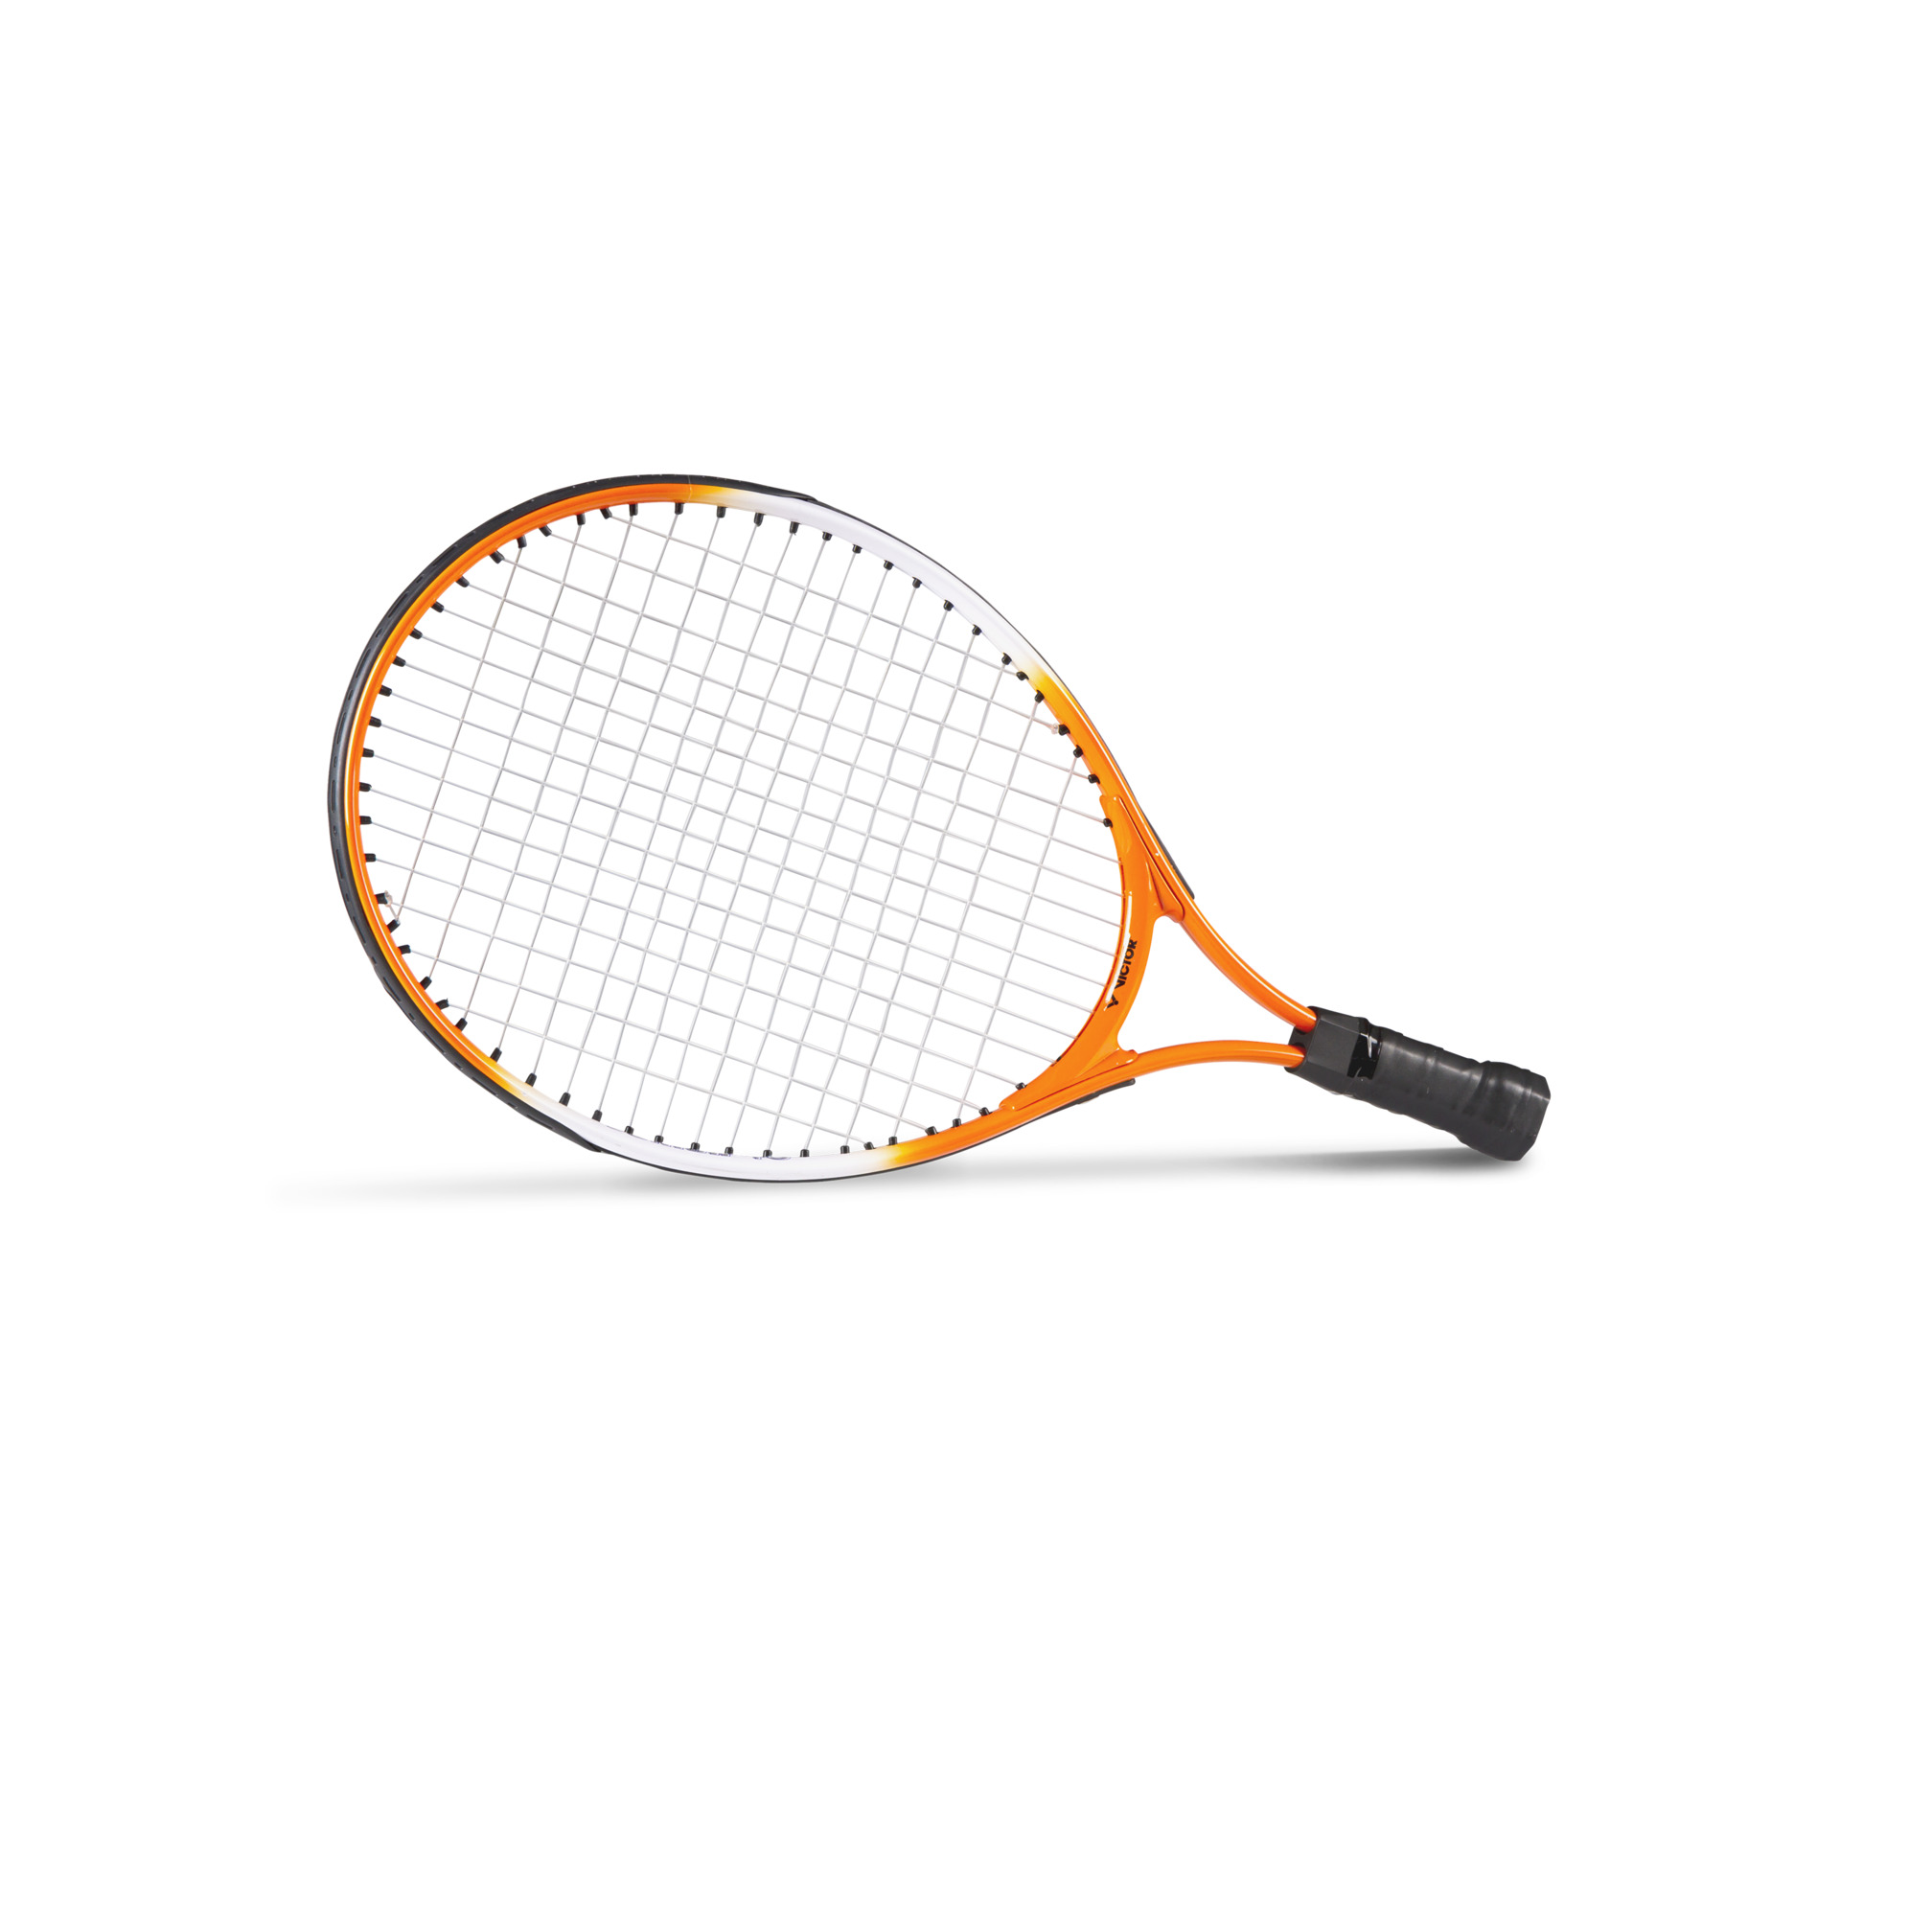 Tennis racket junior, 48 cm